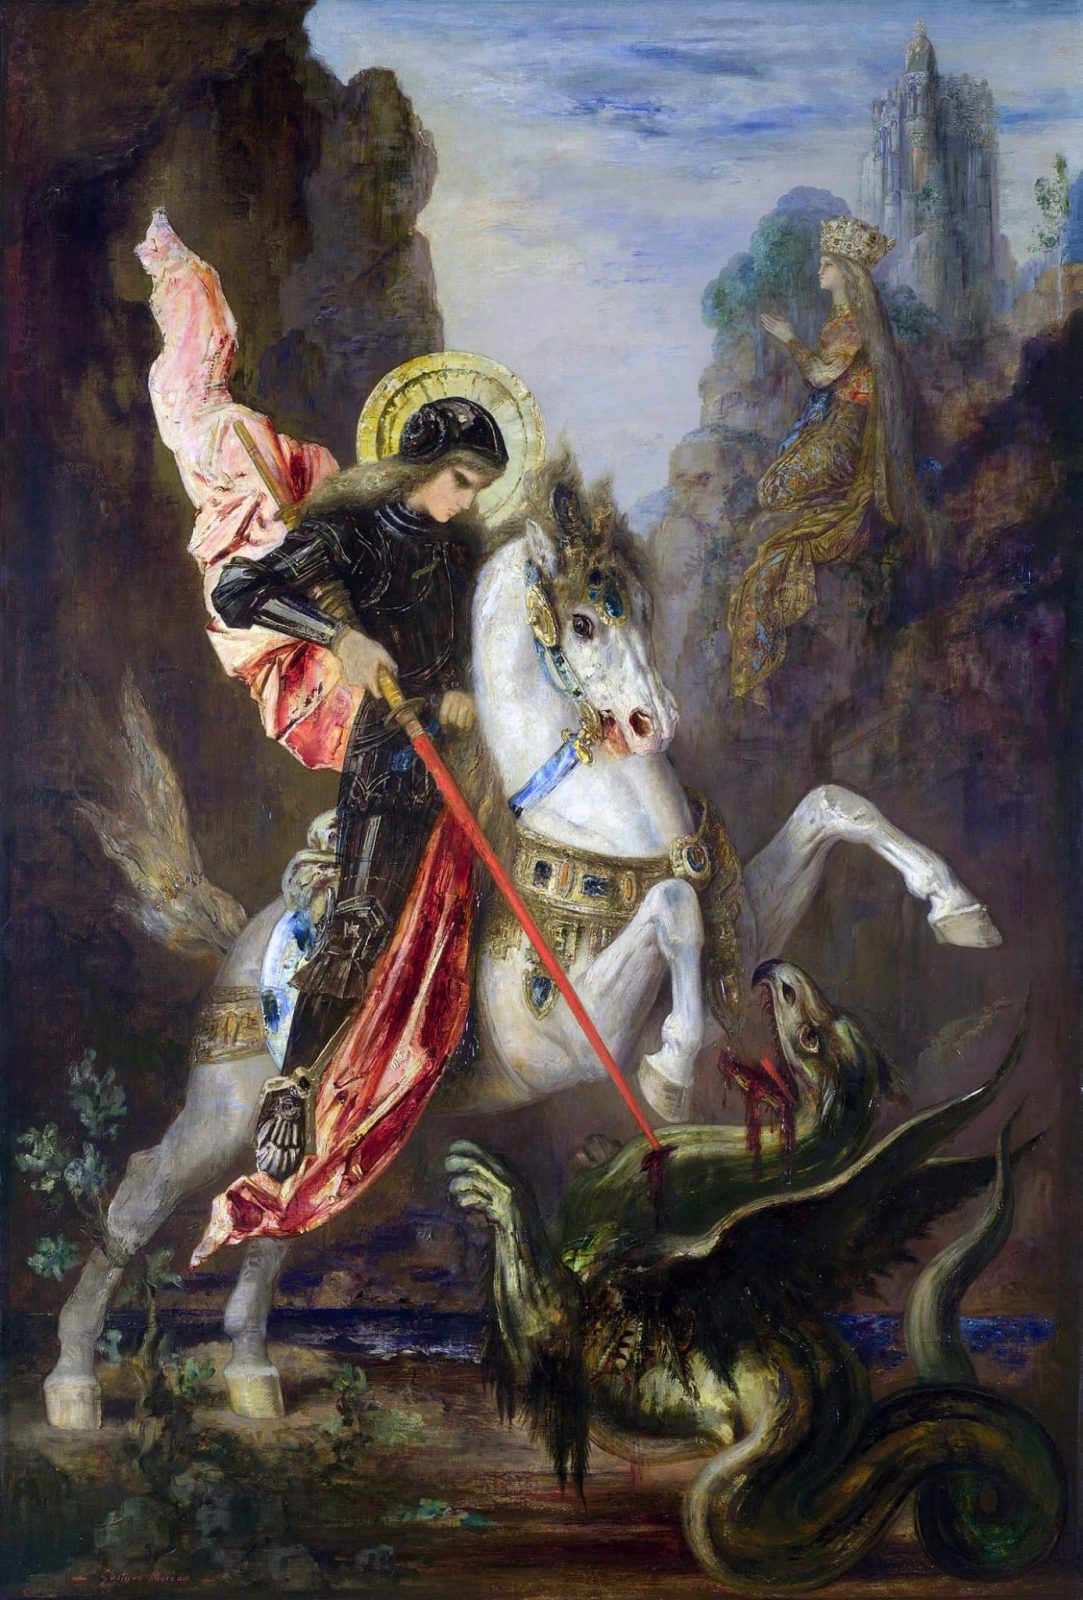 San Giorgio il Santo del 23 Aprile Gustave Moreau, Saint George and the Dragon, oil on canvas, 1889-1890 (The National Gallery, London)